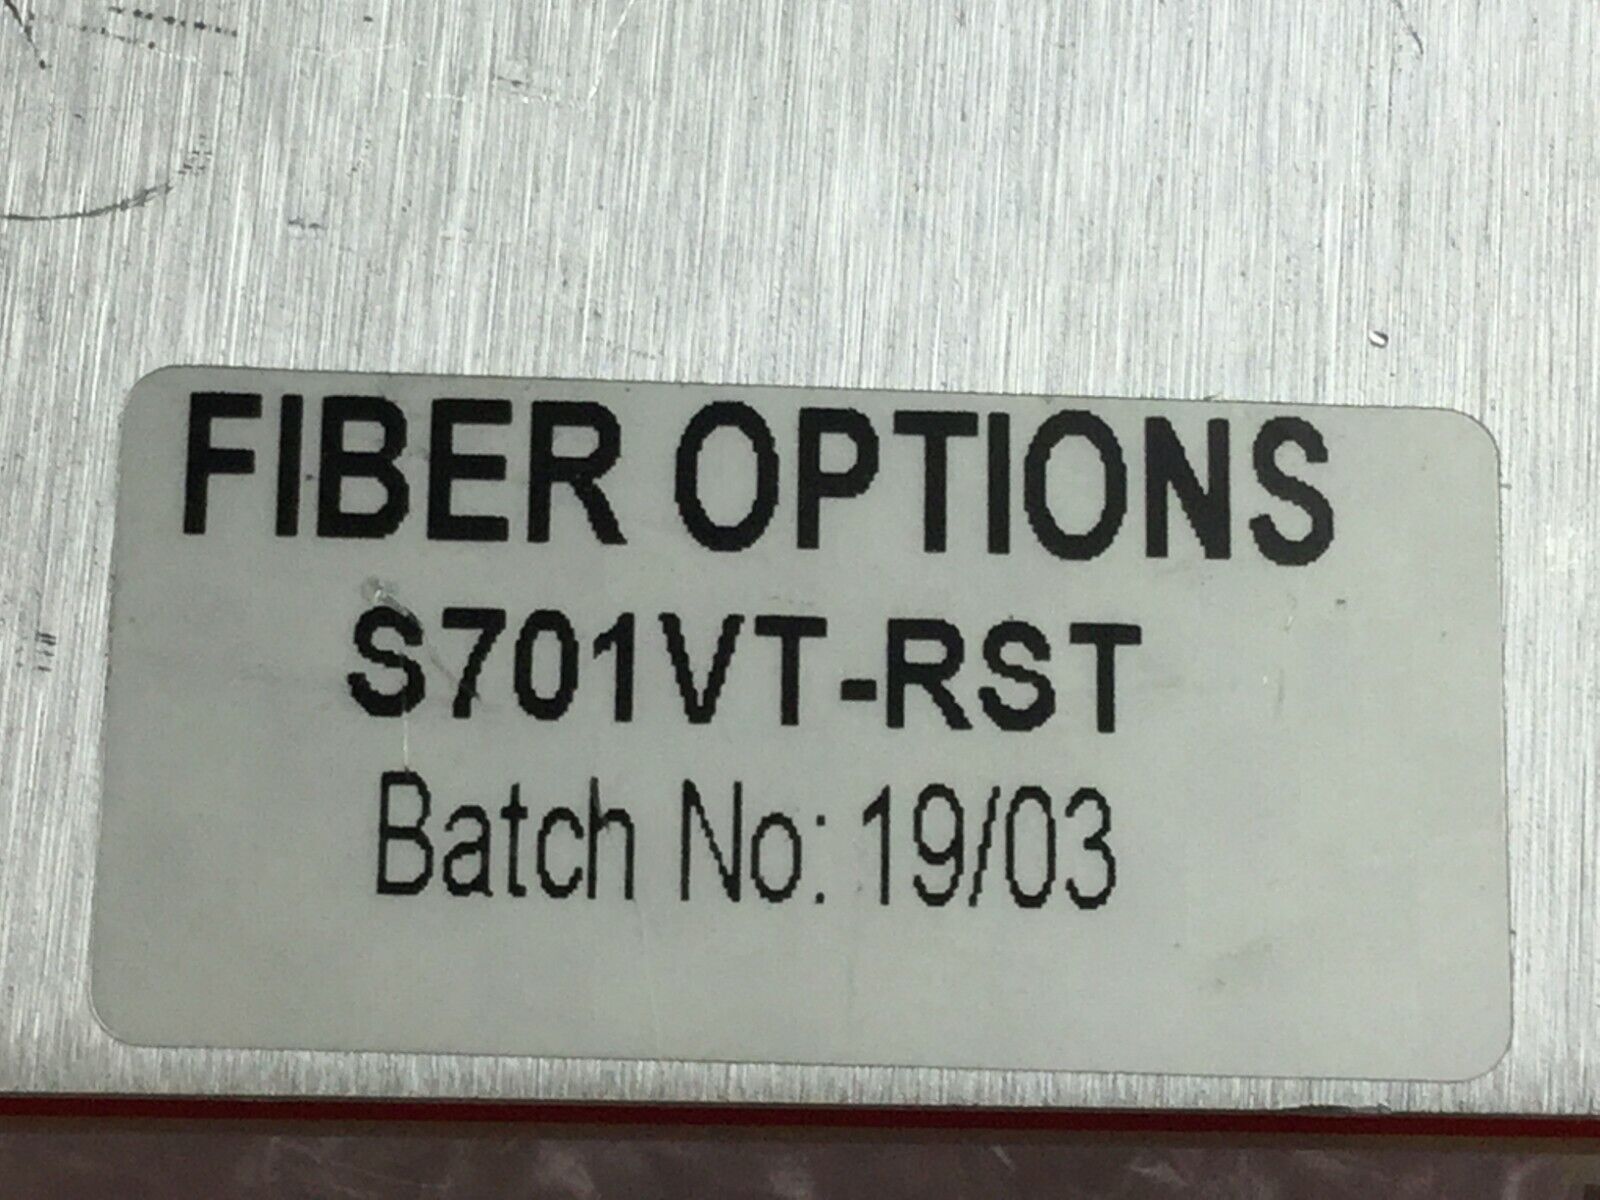 Fiber Options S701VT-RST  Video In Control Board Transmitter 701-T